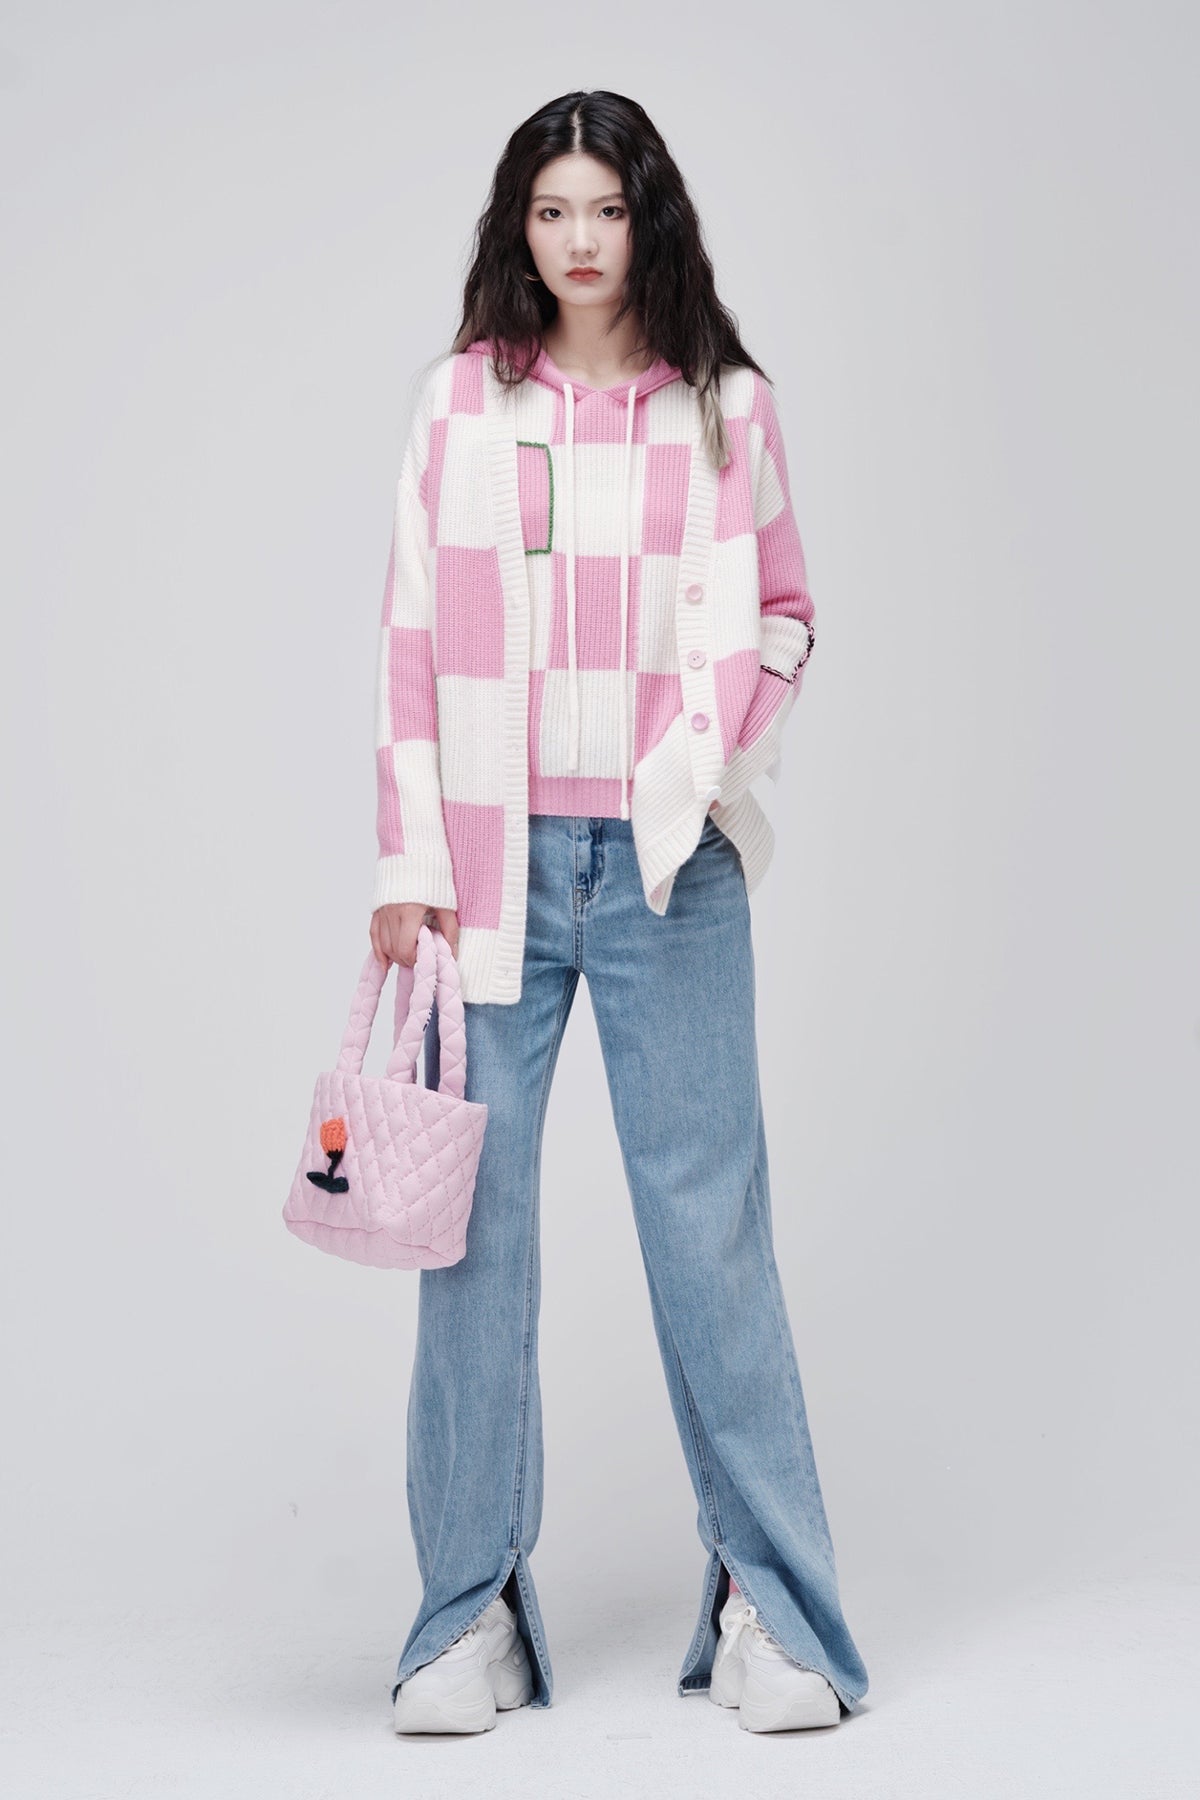 ZI II CI IEN | Pink Oversize Checkered Cashmere Cardigan